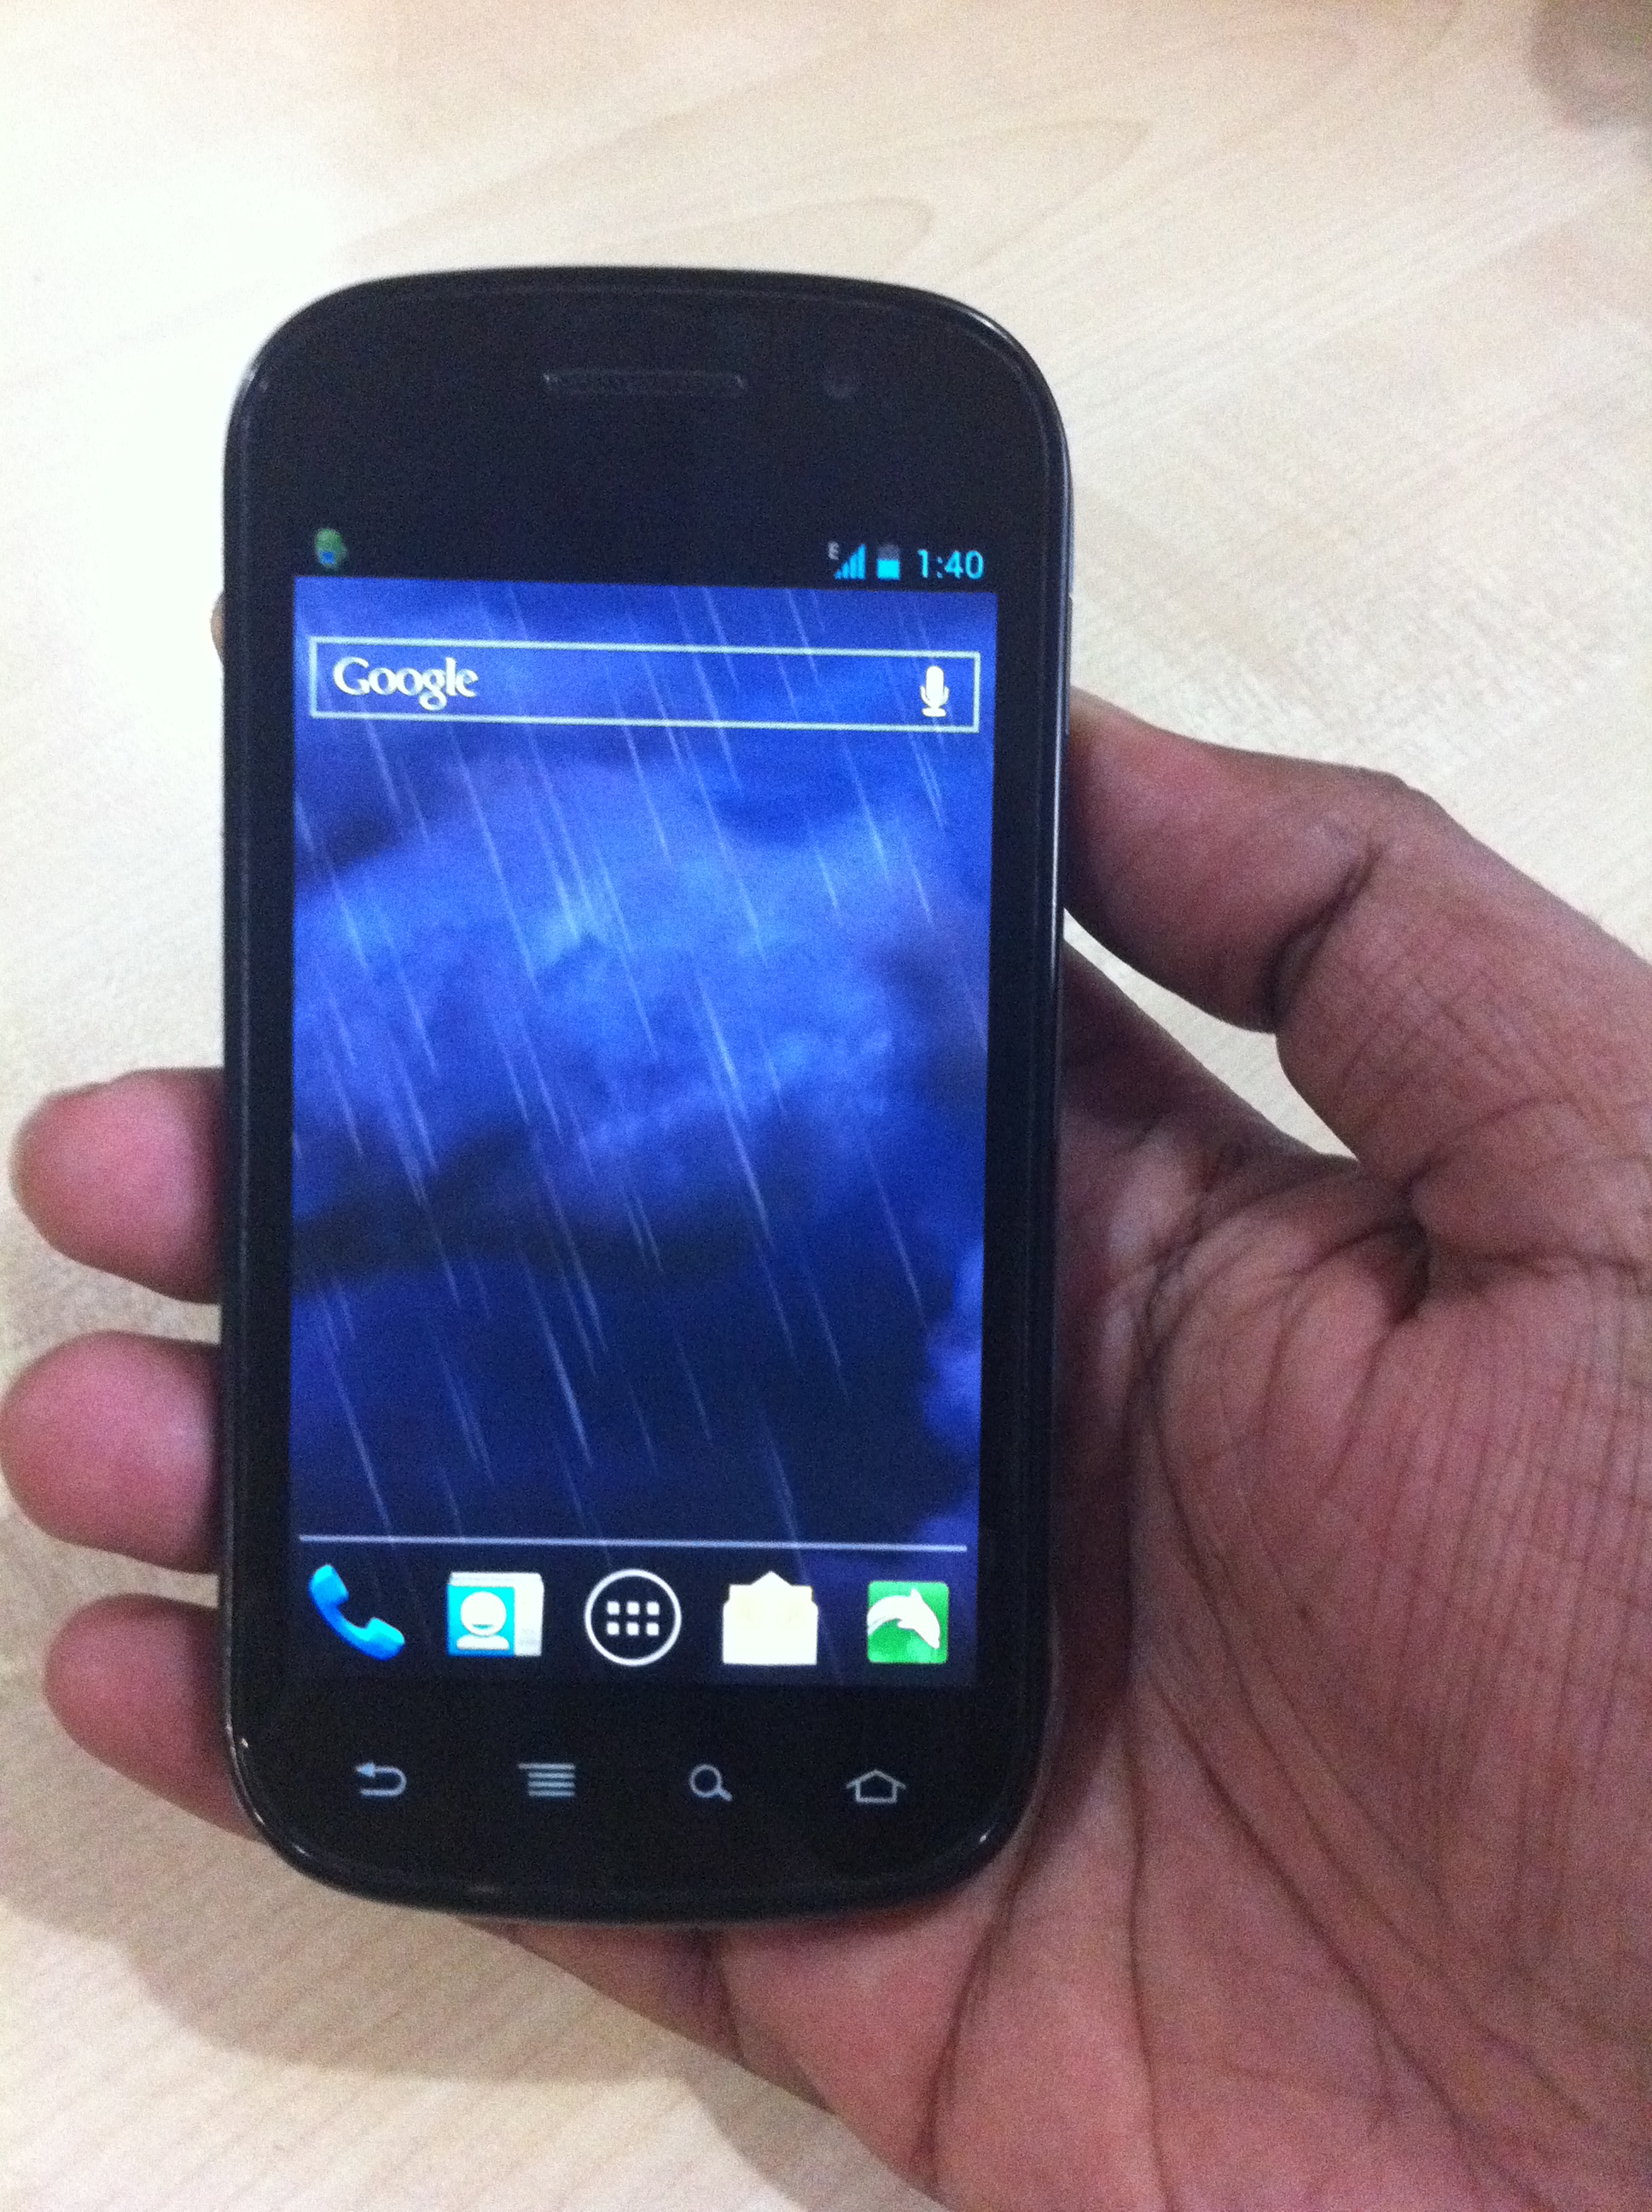 Samsung Google Nexus S with Icecream Sandwitch update large image 1